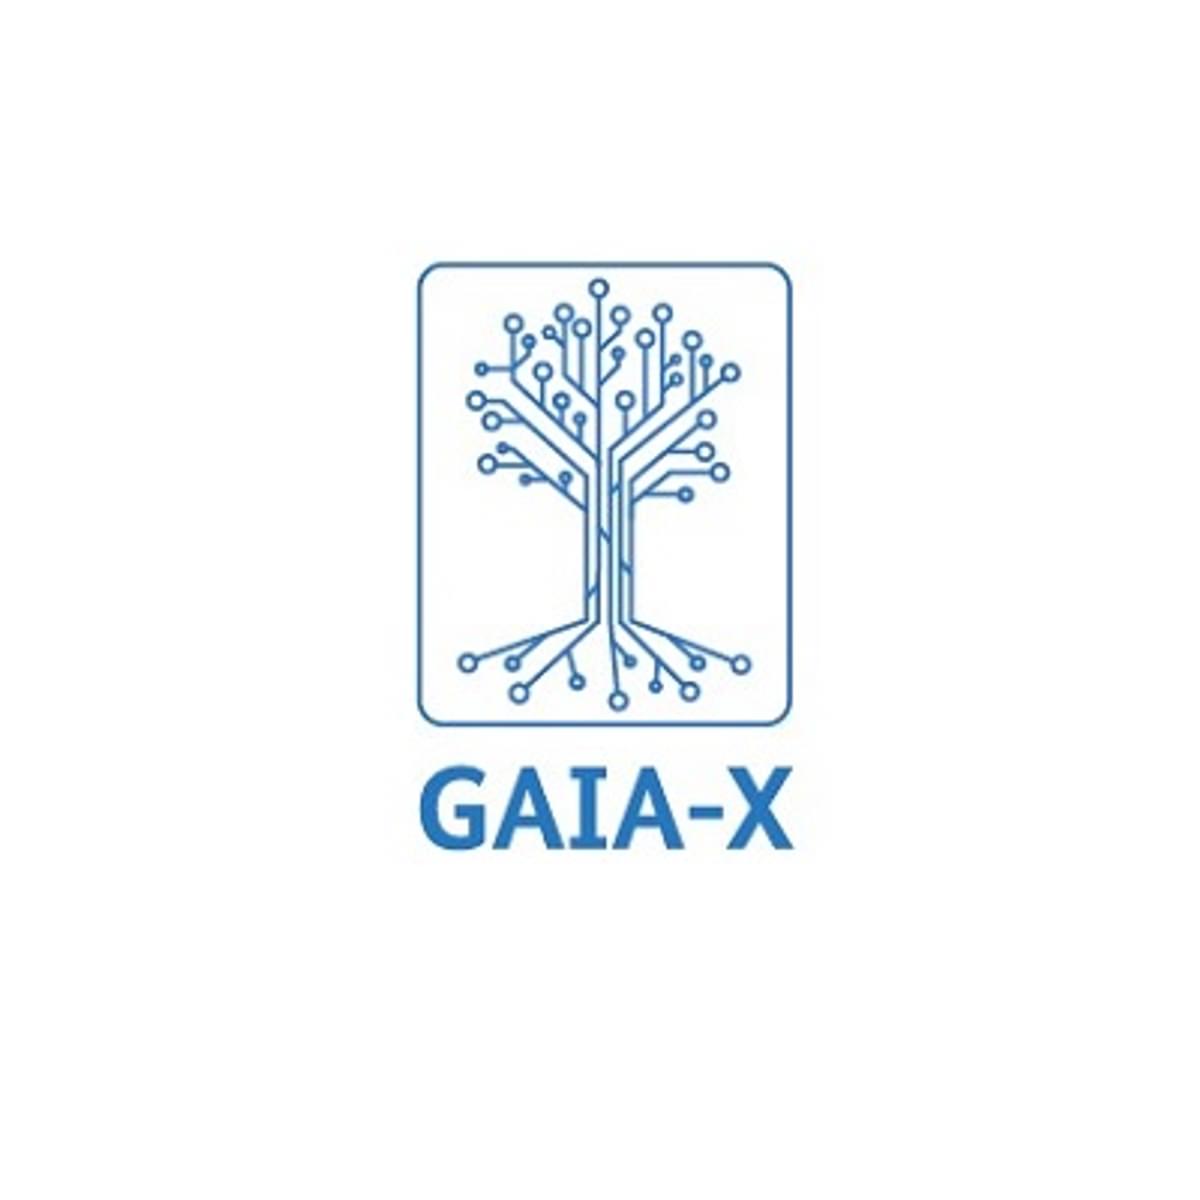 Gaia-x bundelt krachten met DAASI International en Vereign rondom Self-Sovereign Identity image